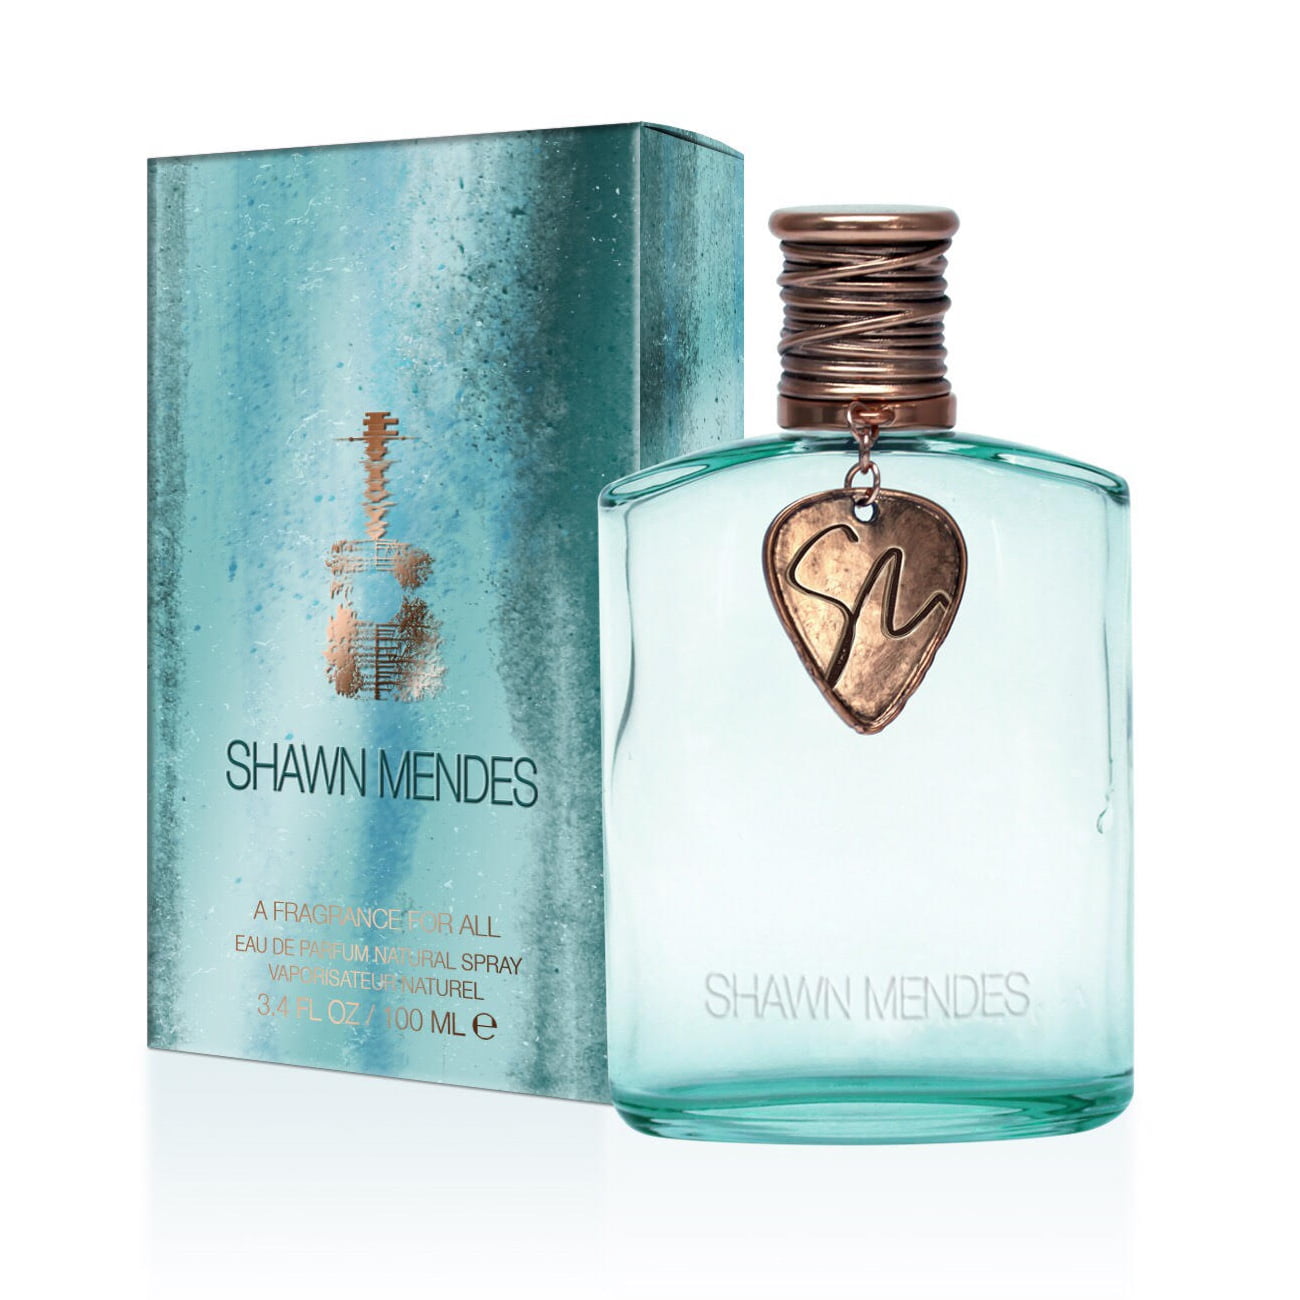 shawn mendes gucci perfume